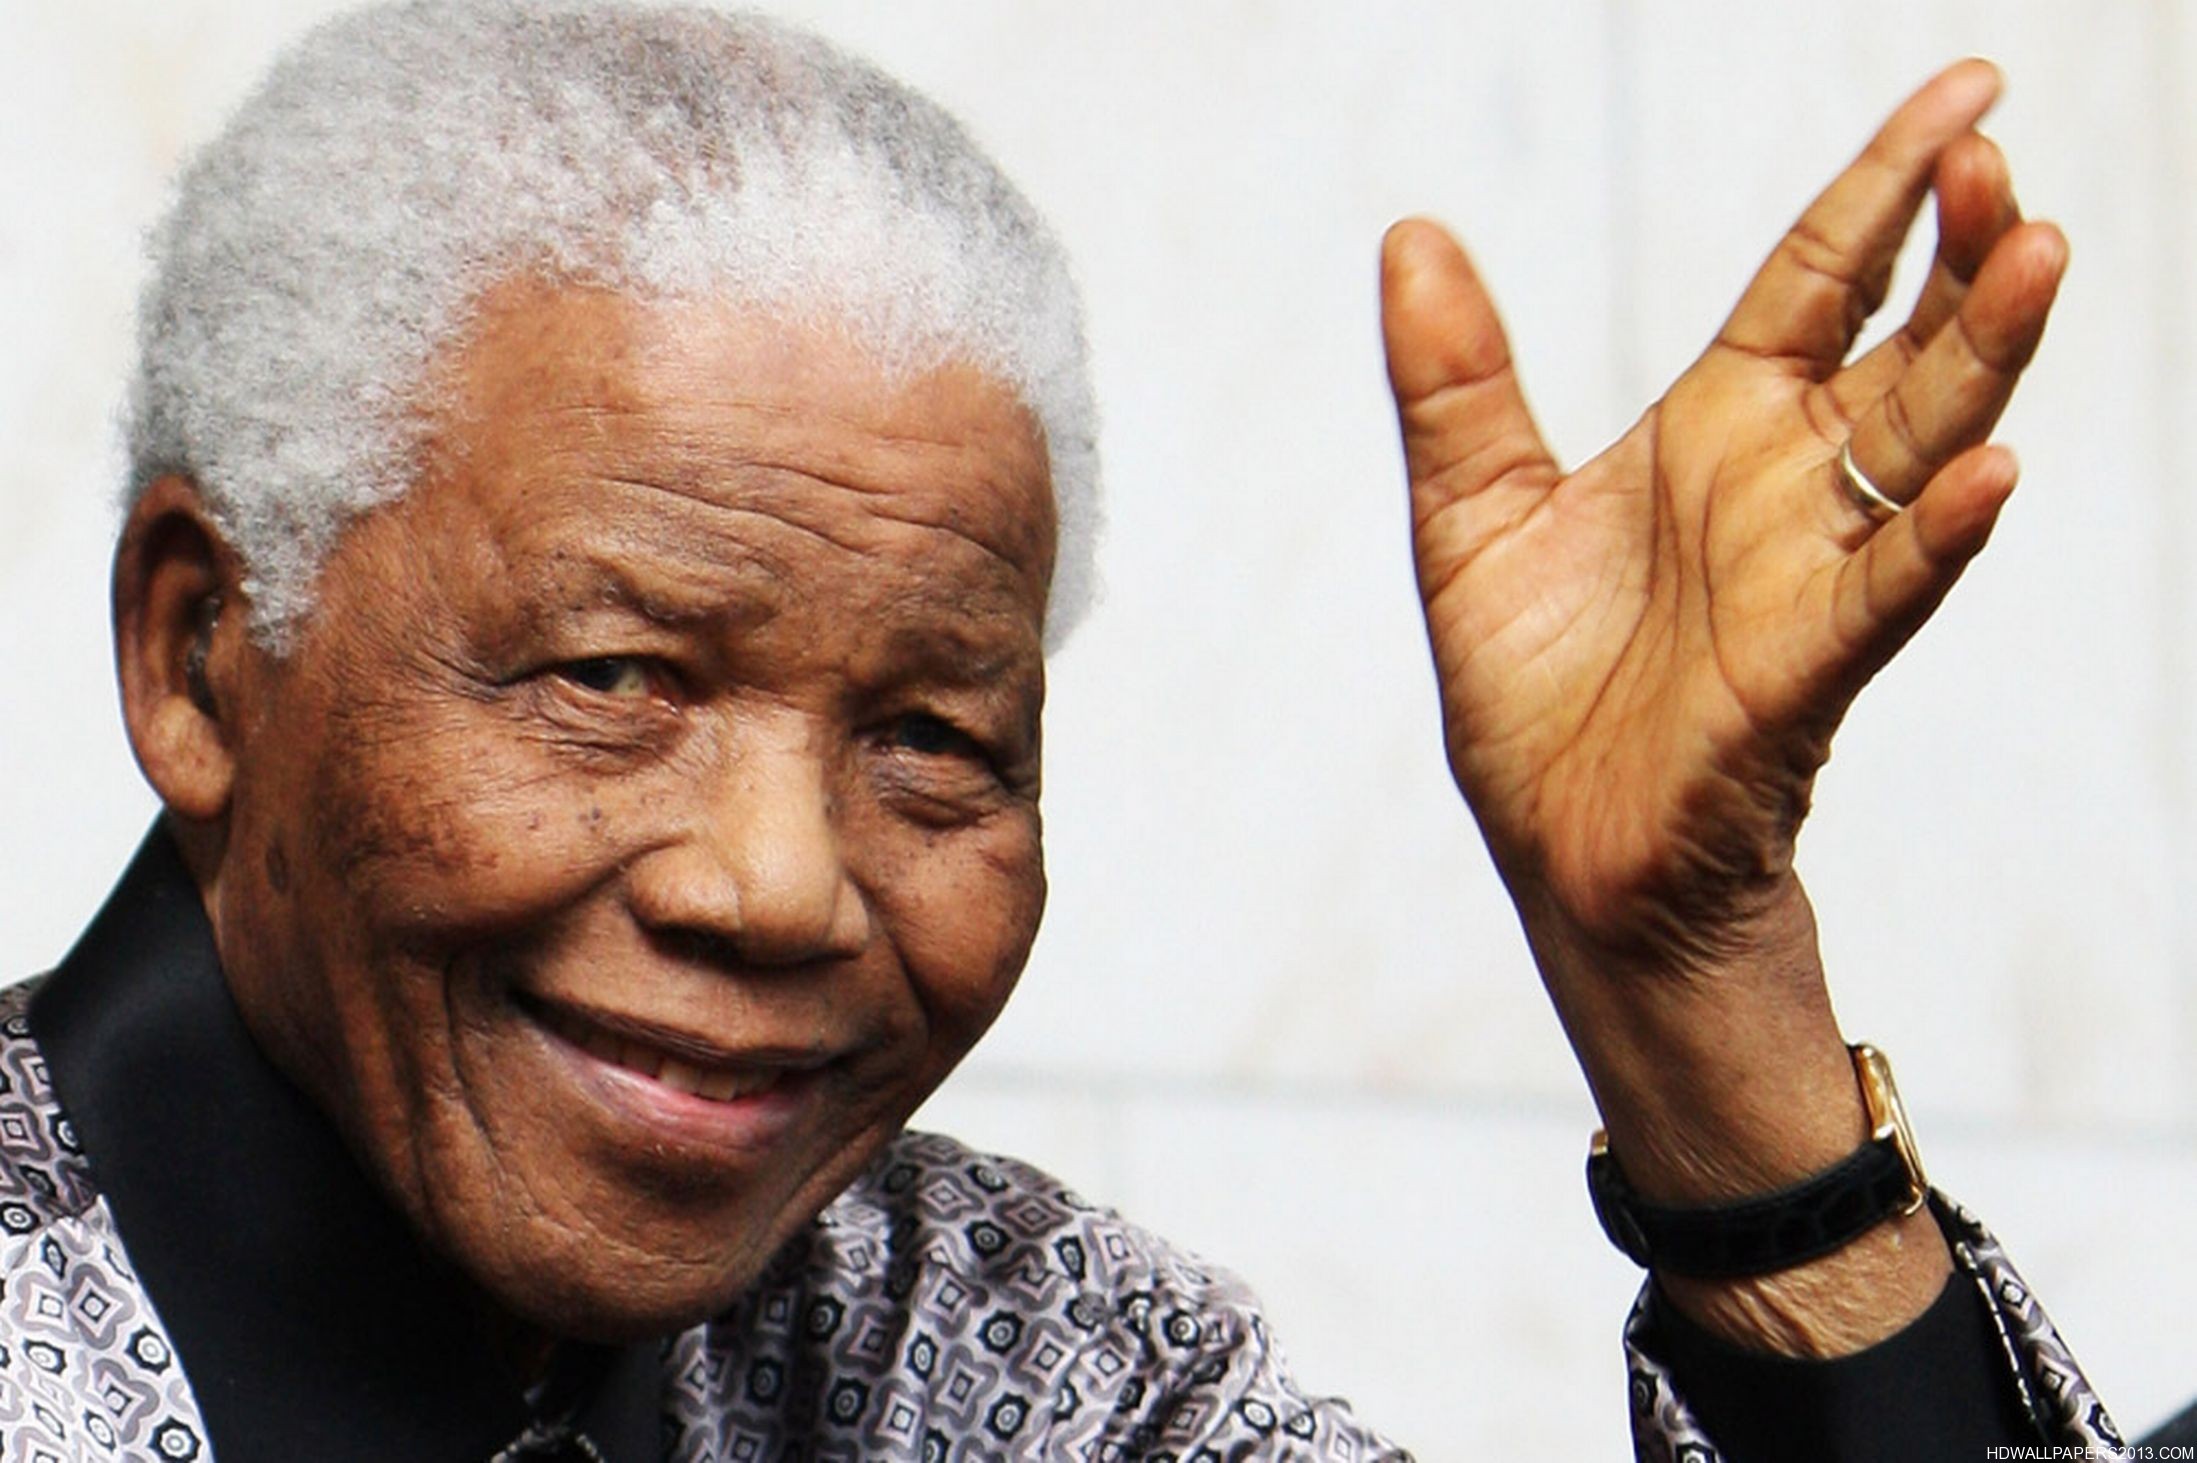 Nelson Mandela , HD Wallpaper & Backgrounds